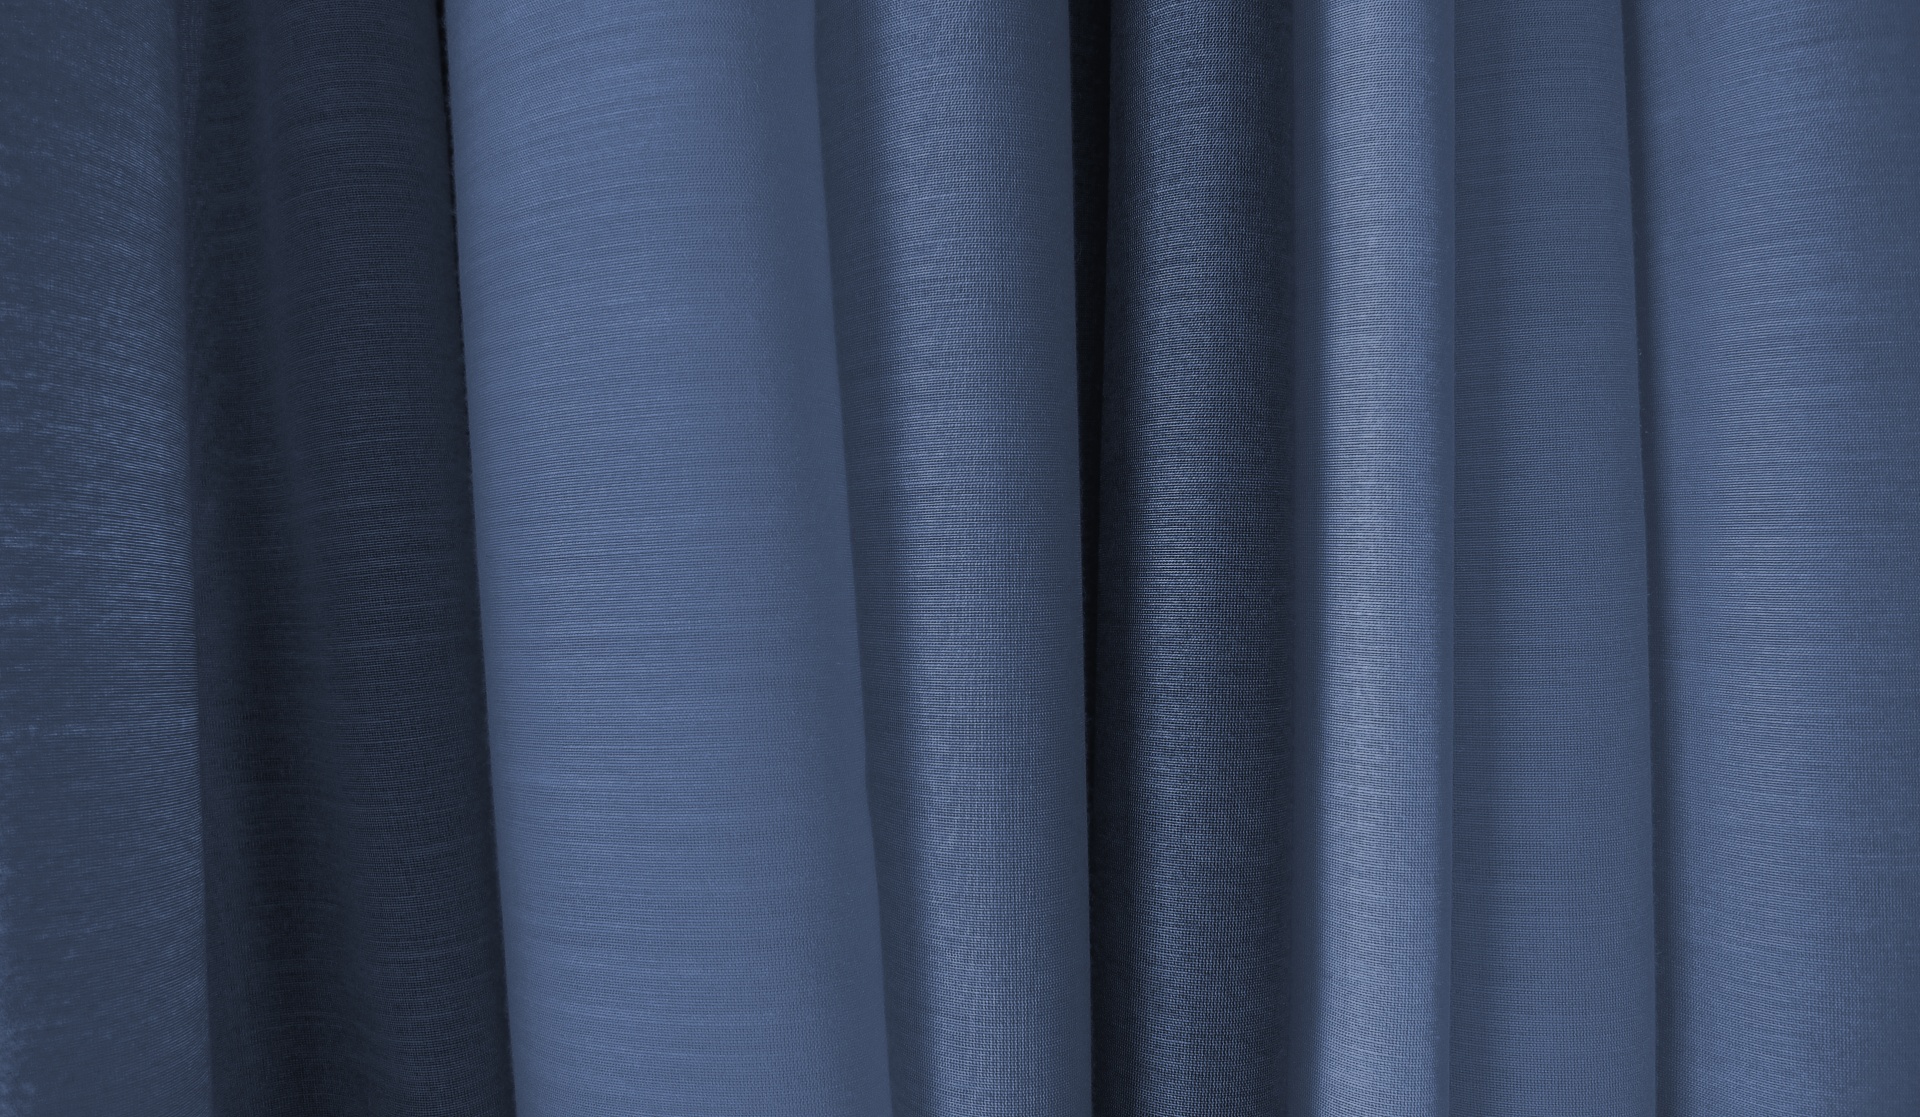 Cortinas, cortinas de tecido azul